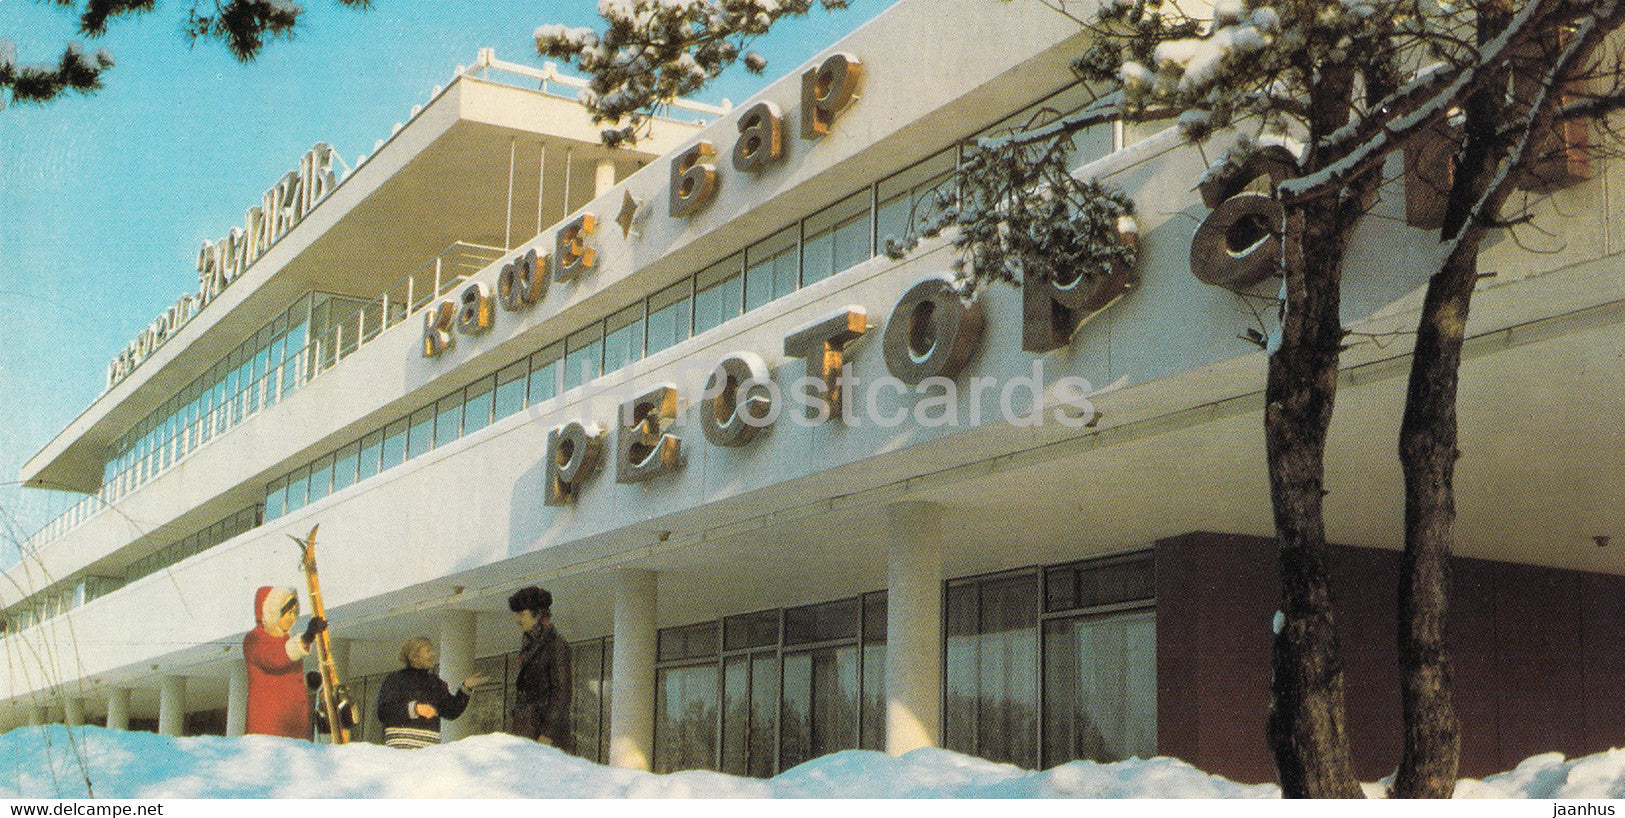 Minsk - Zaslavl restaurant - 1983 - Belarus USSR - unused - JH Postcards